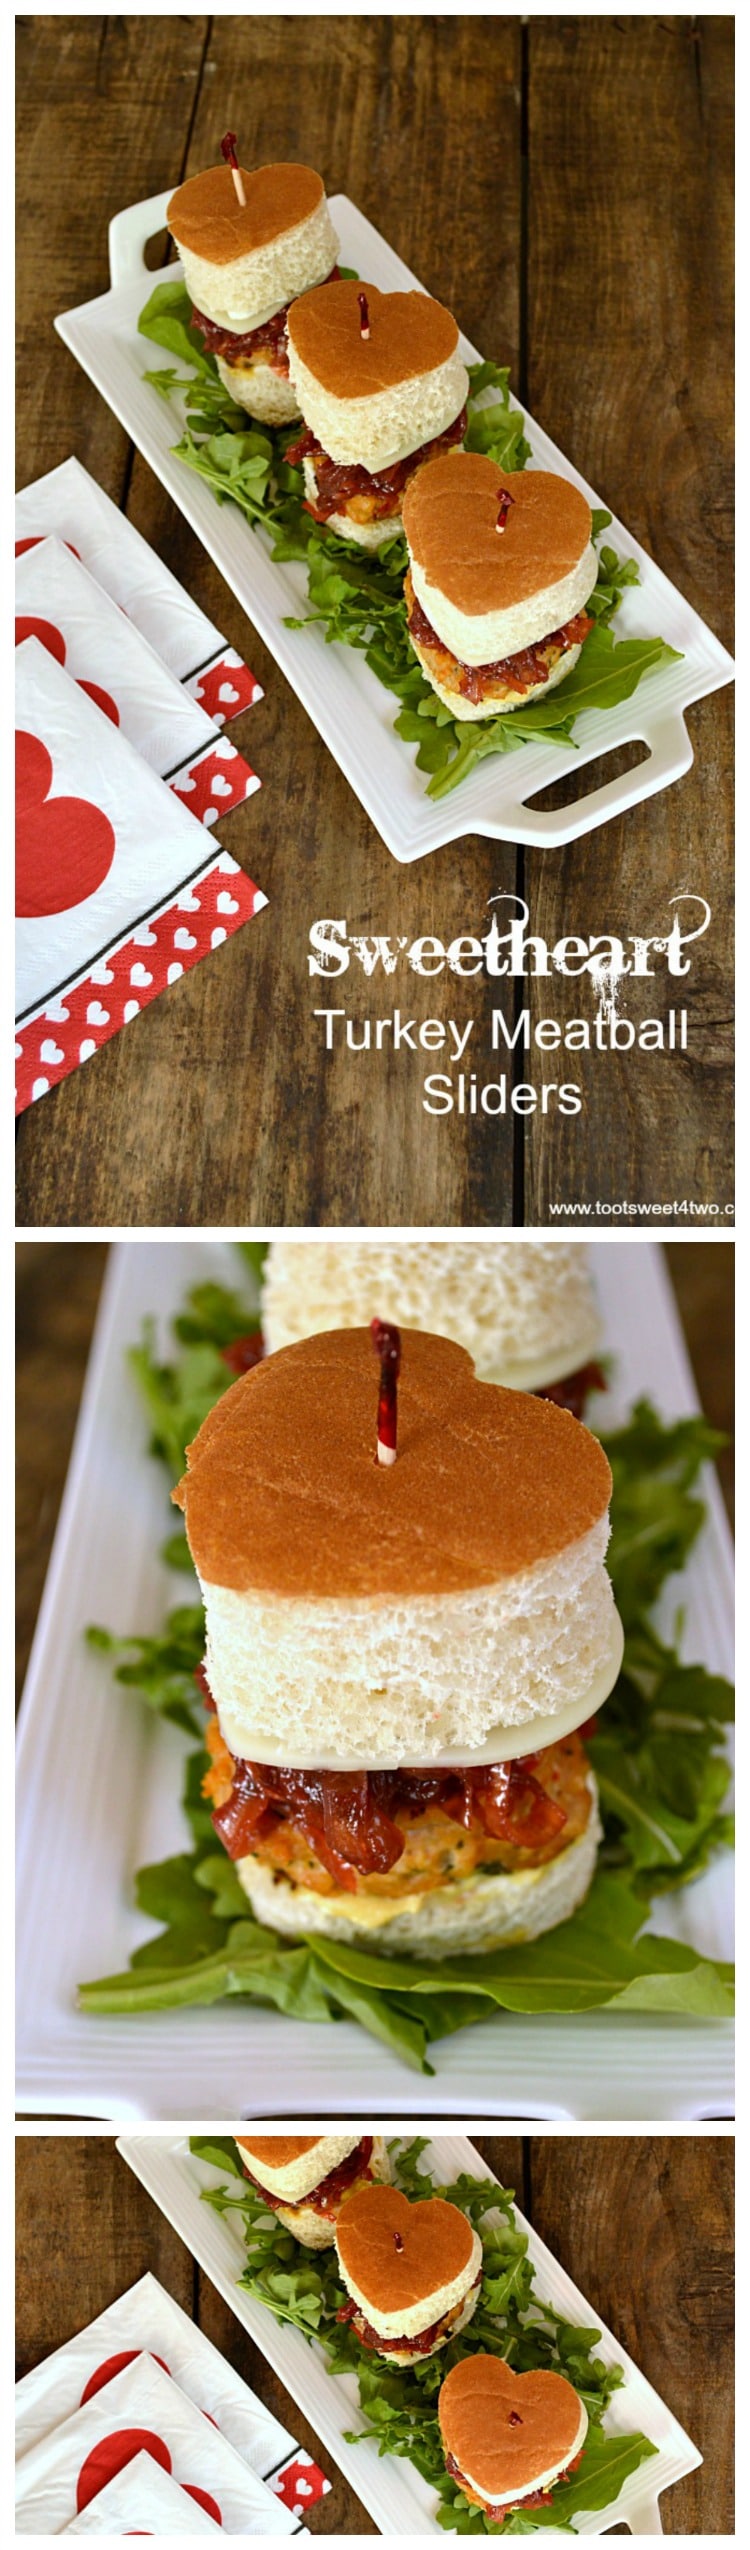 Sweetheart Turkey Meatball Sliders collage